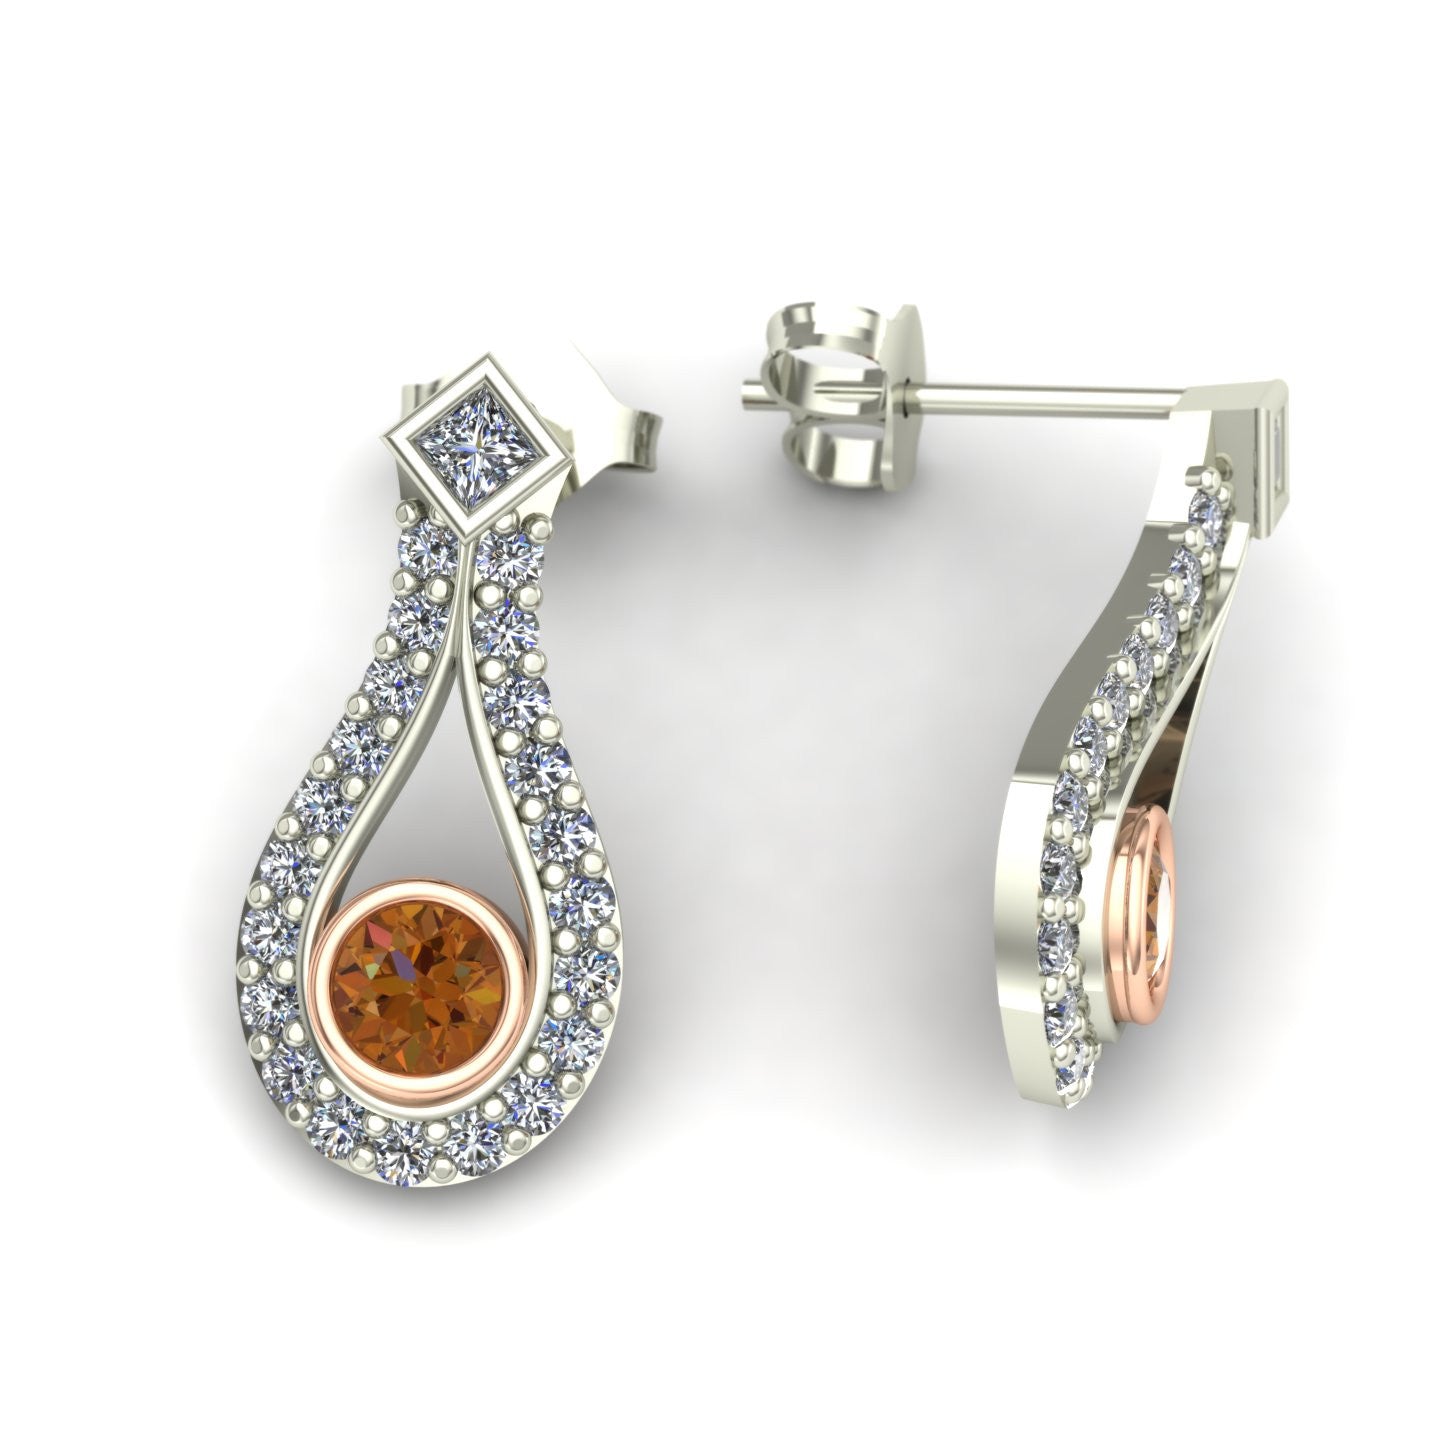 bezel set cognac diamond two tone earrings in 14k rose and white gold - Charles Babb Designs - 2